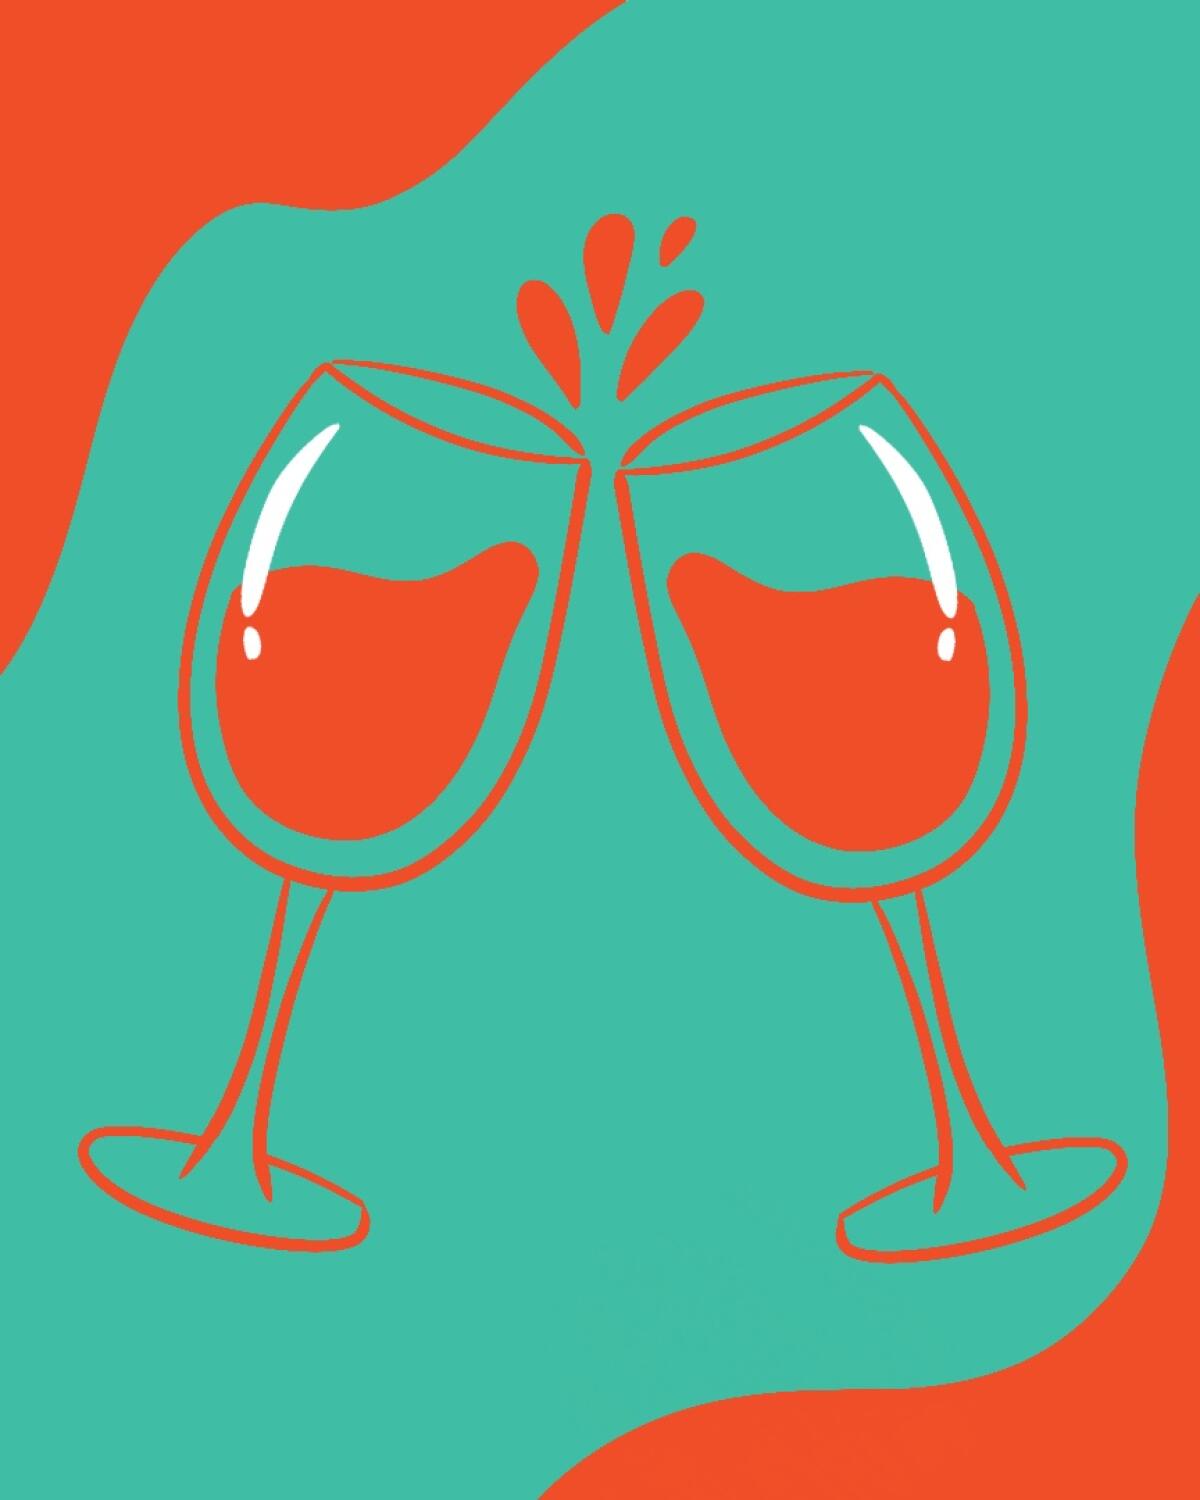 Illustration of wine glasses cheers-ing.